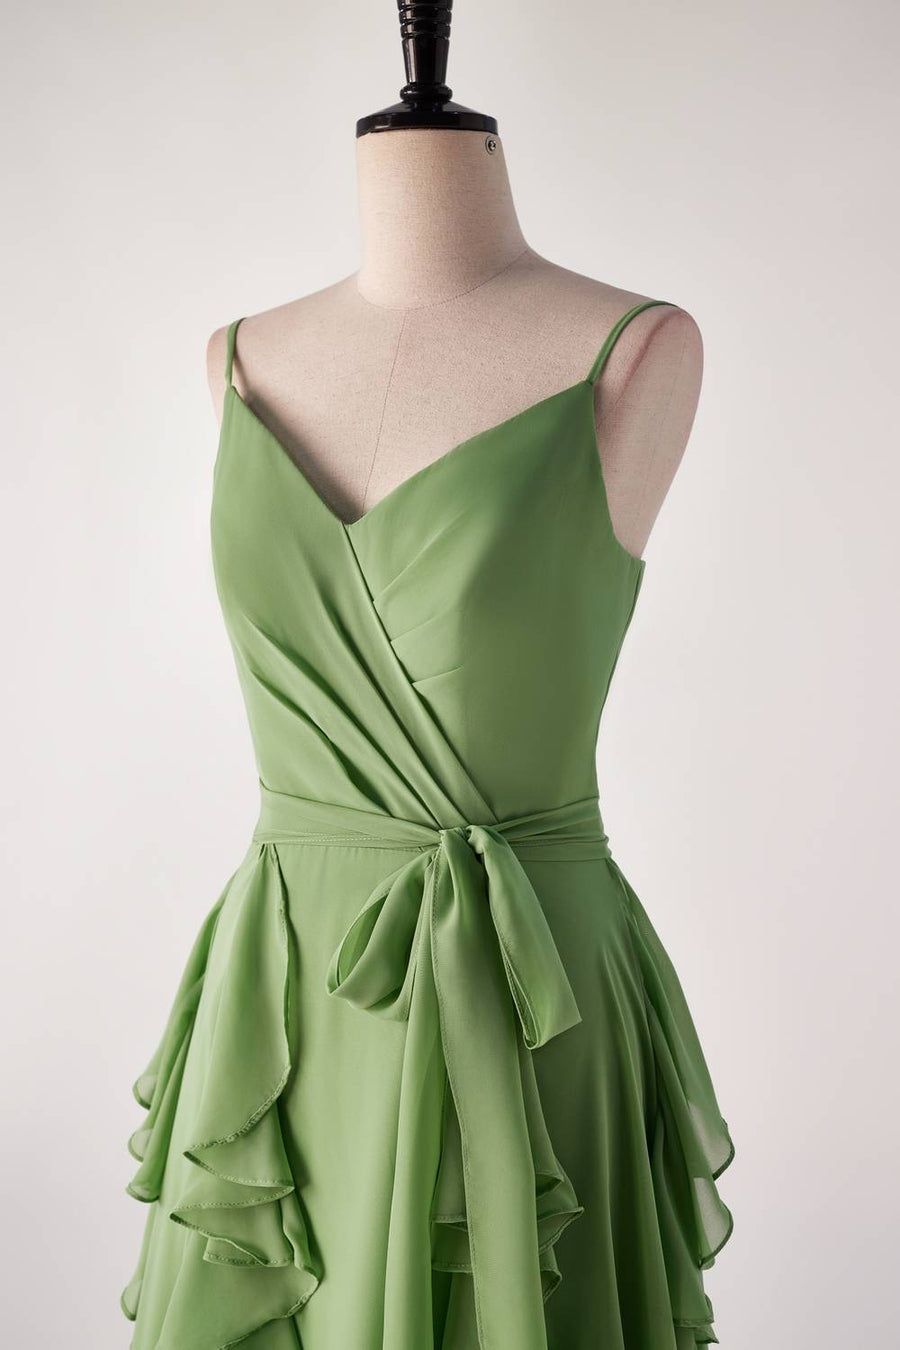 Matcha Green Ruffles Faux Wrap Bridesmaid Dress